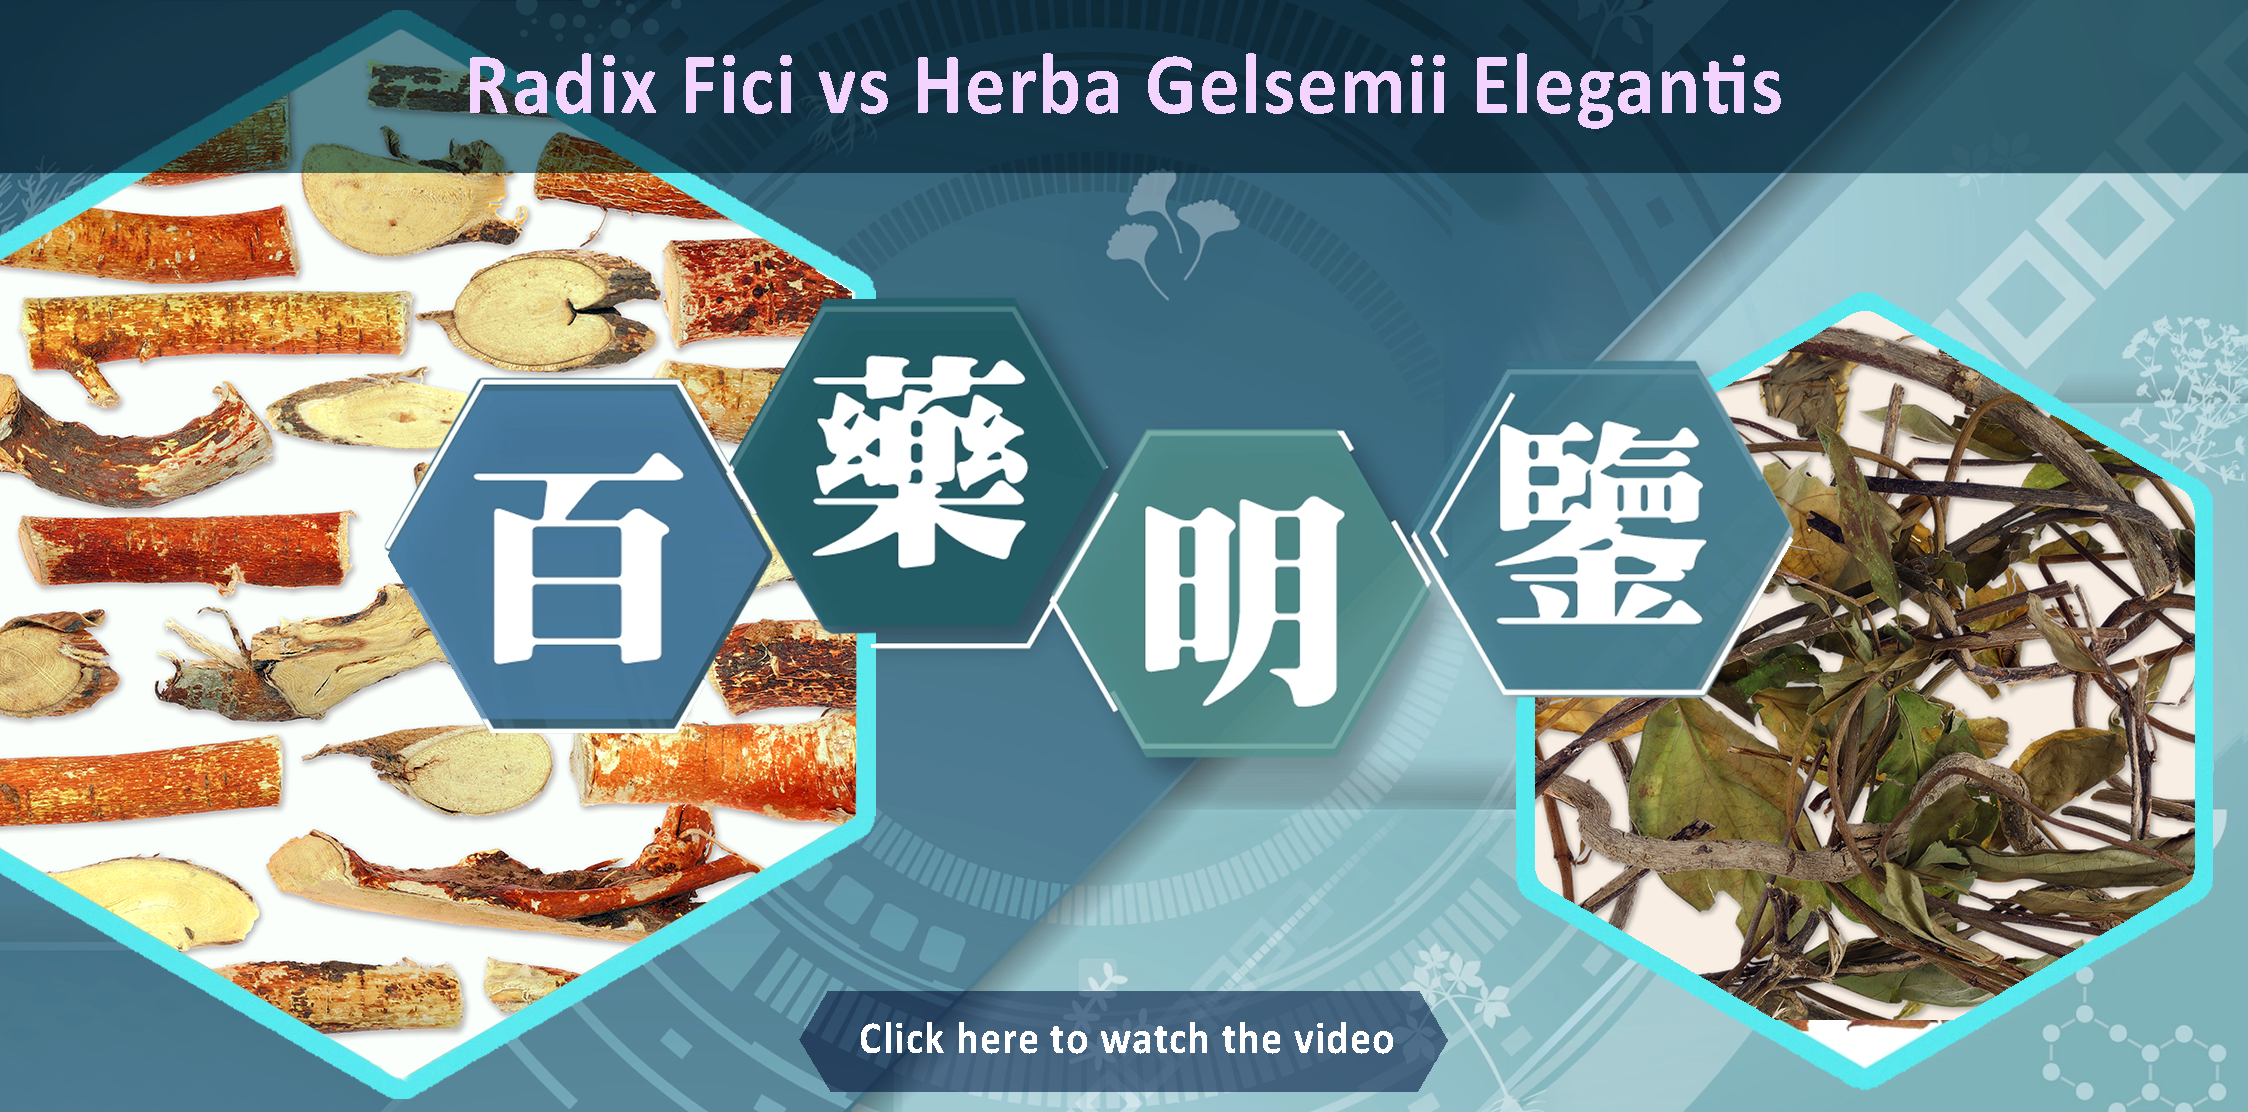 Key Identification Features of Radix Fici vs Herba Gelsemii Elegantis